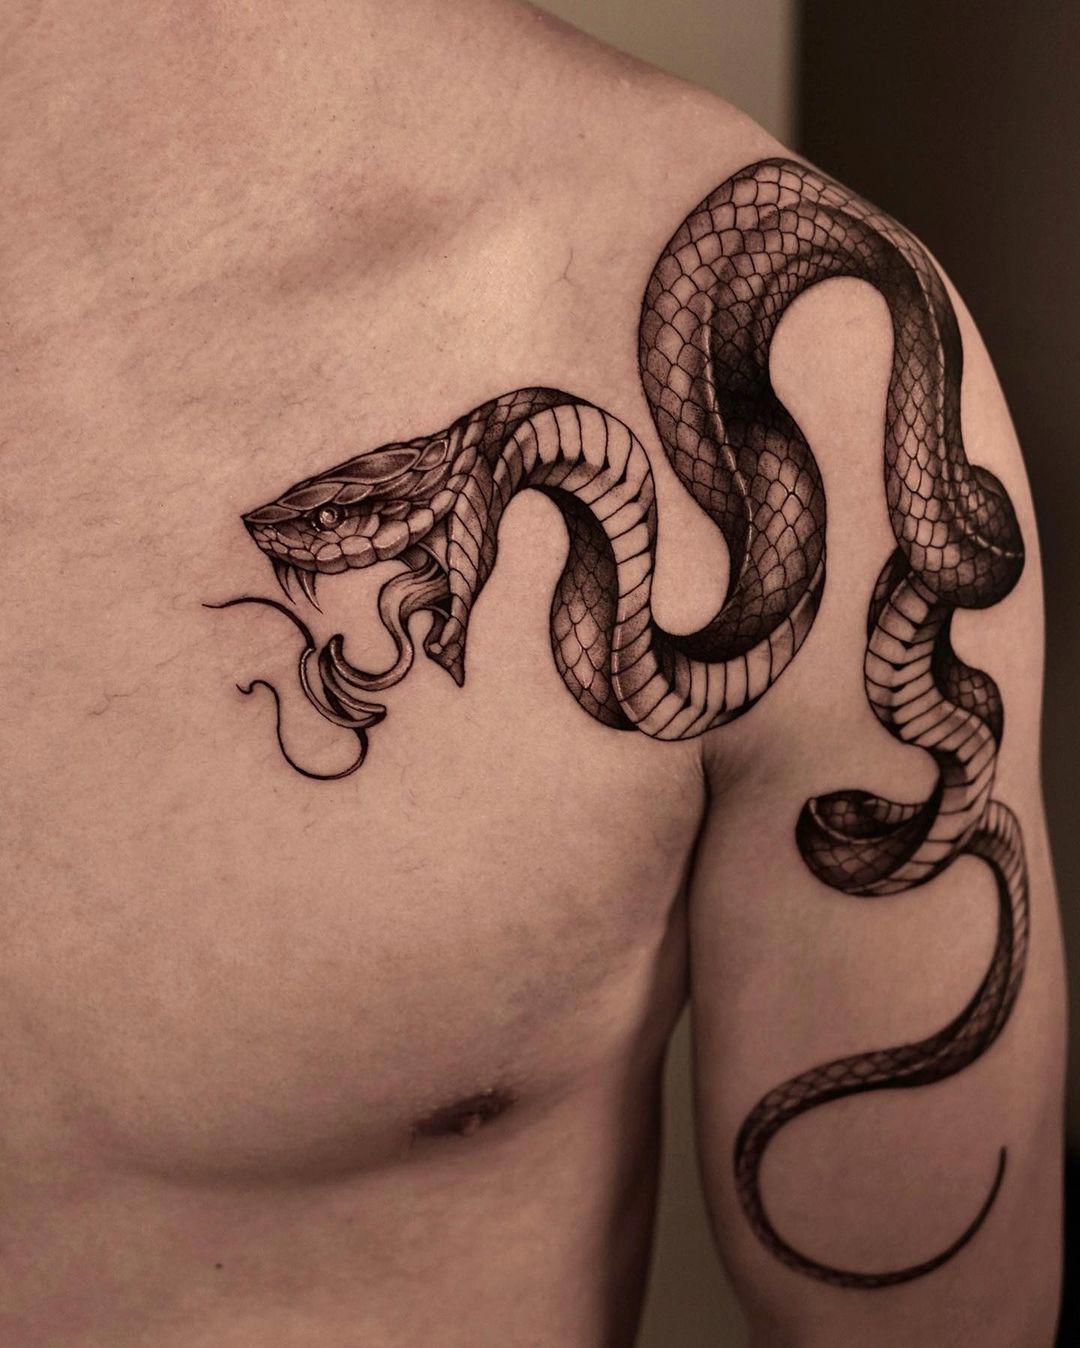 Tatuaje con serpiente